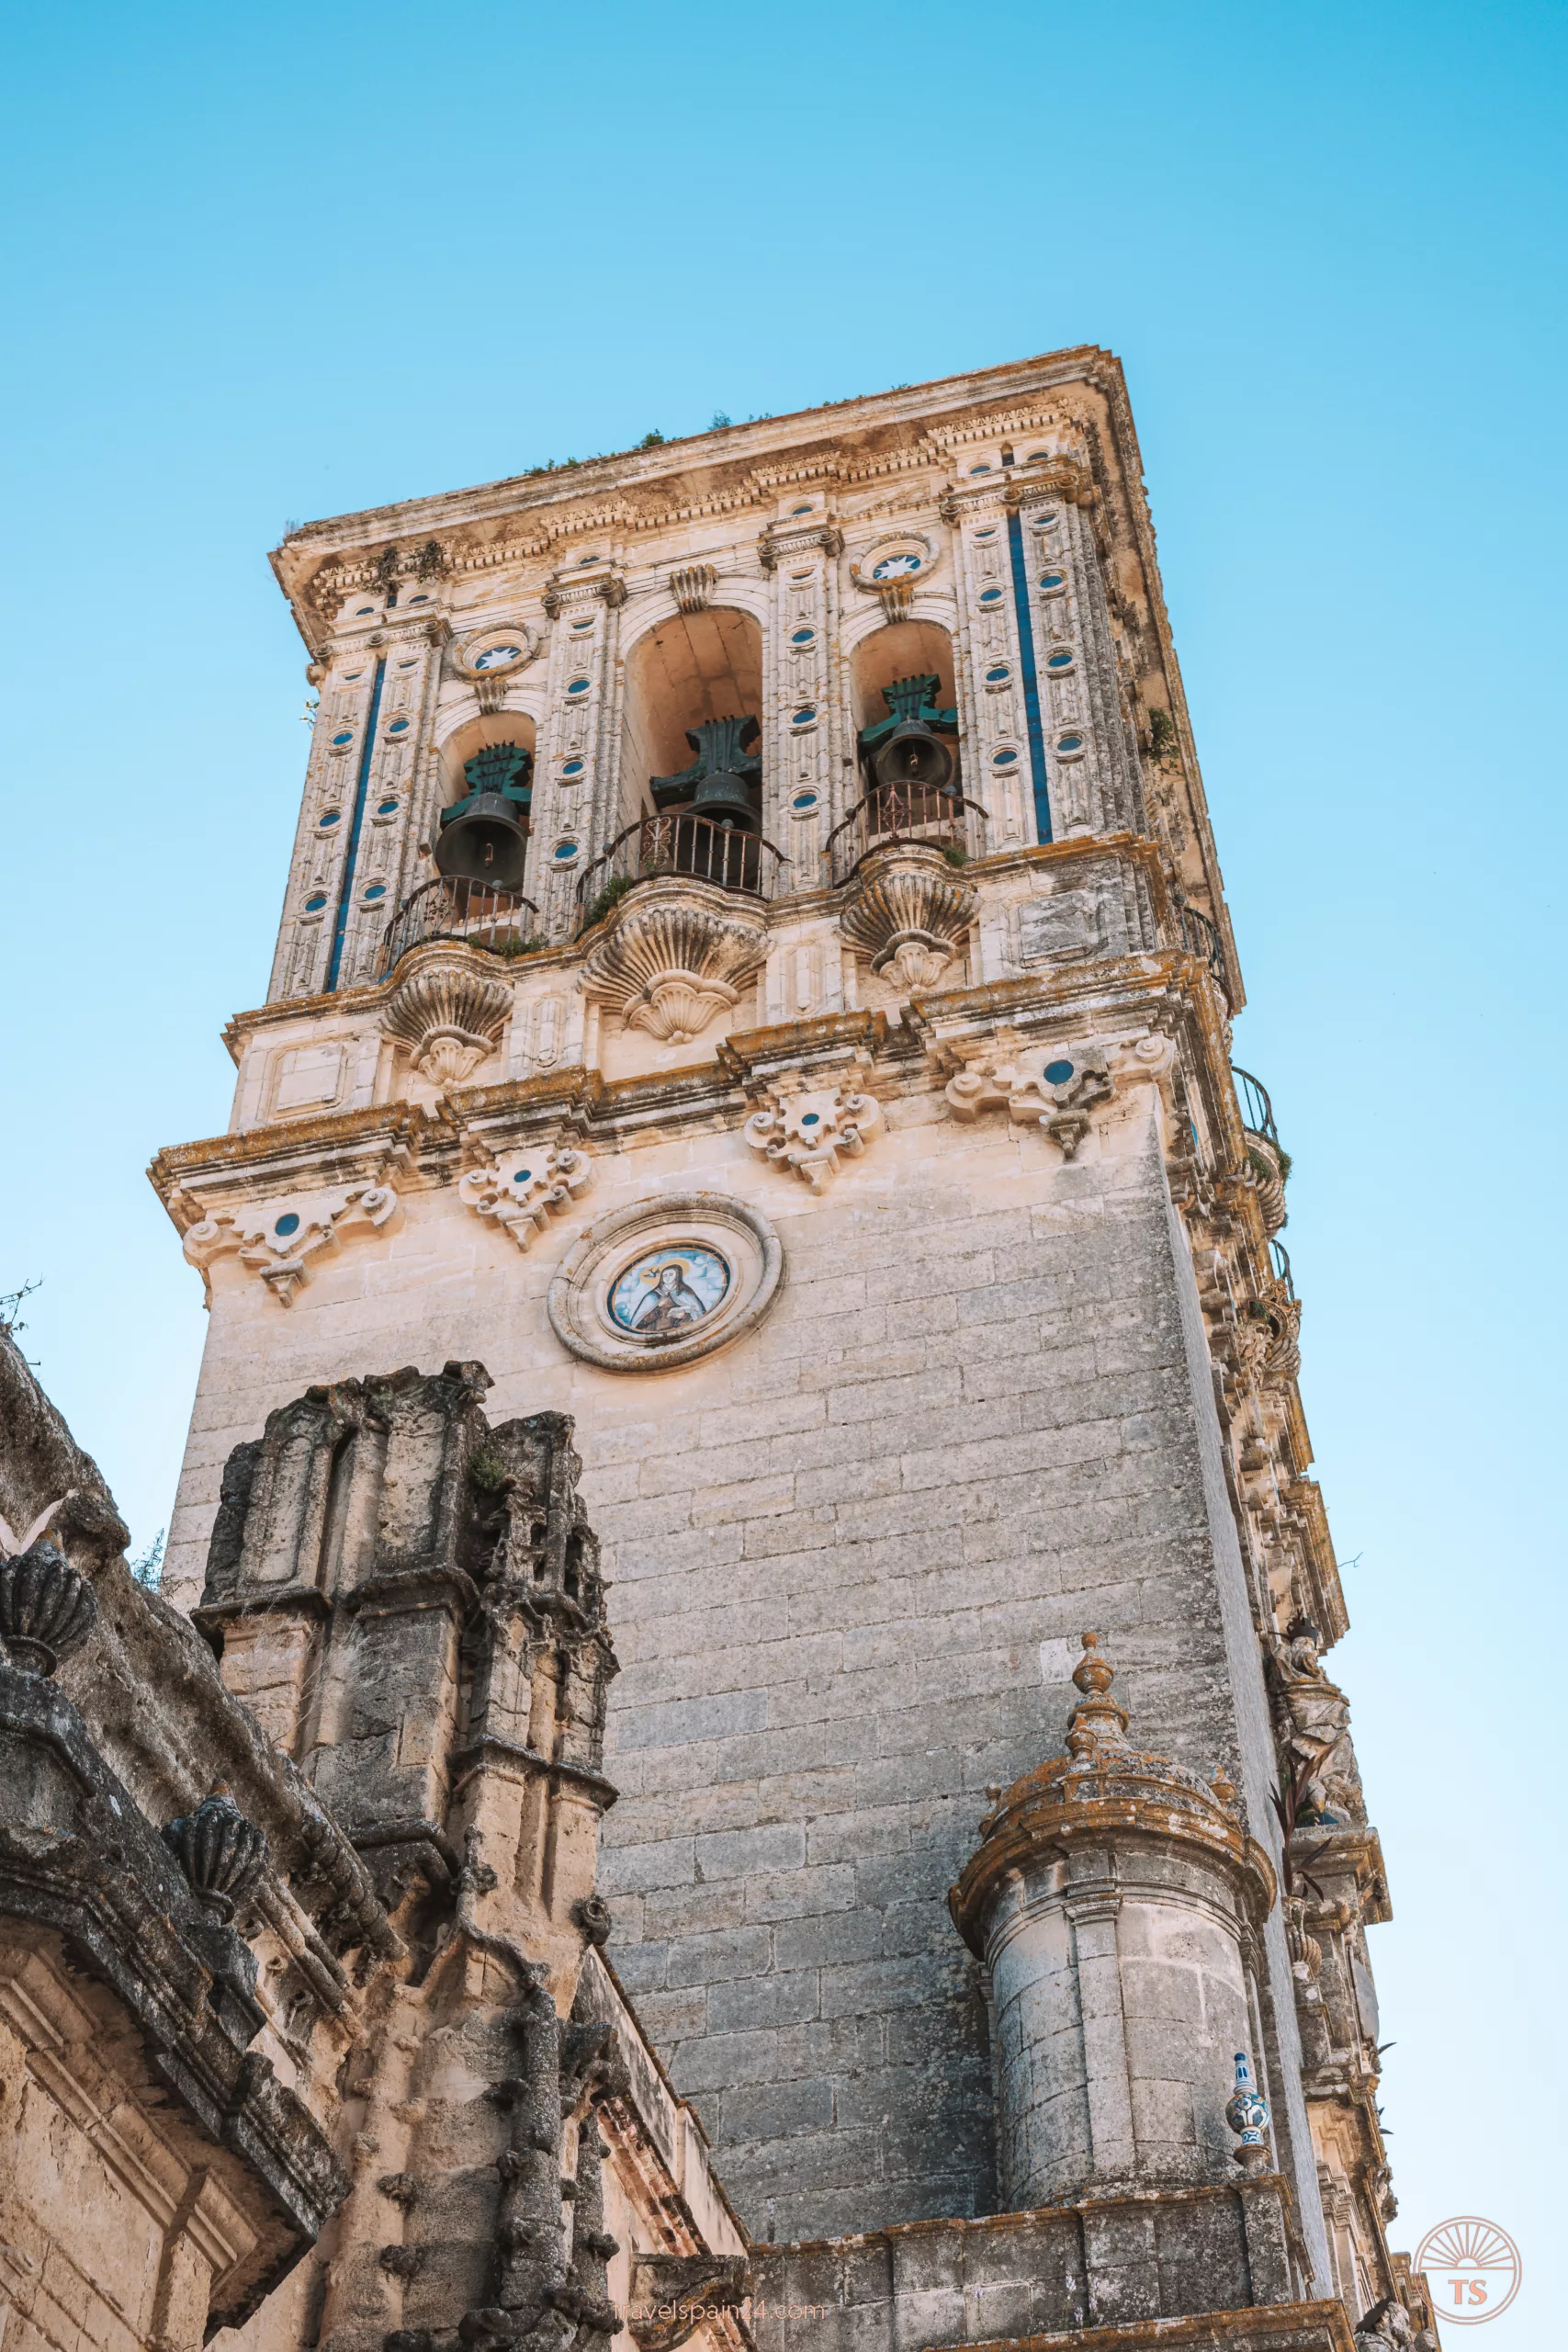 The tower with clocks of the Basilica Menor de Santa María de la Asunción in Arcos de la Frontera, an old Gothic church. The tower has a round tile depicting Mary and intricate architectural carvings.